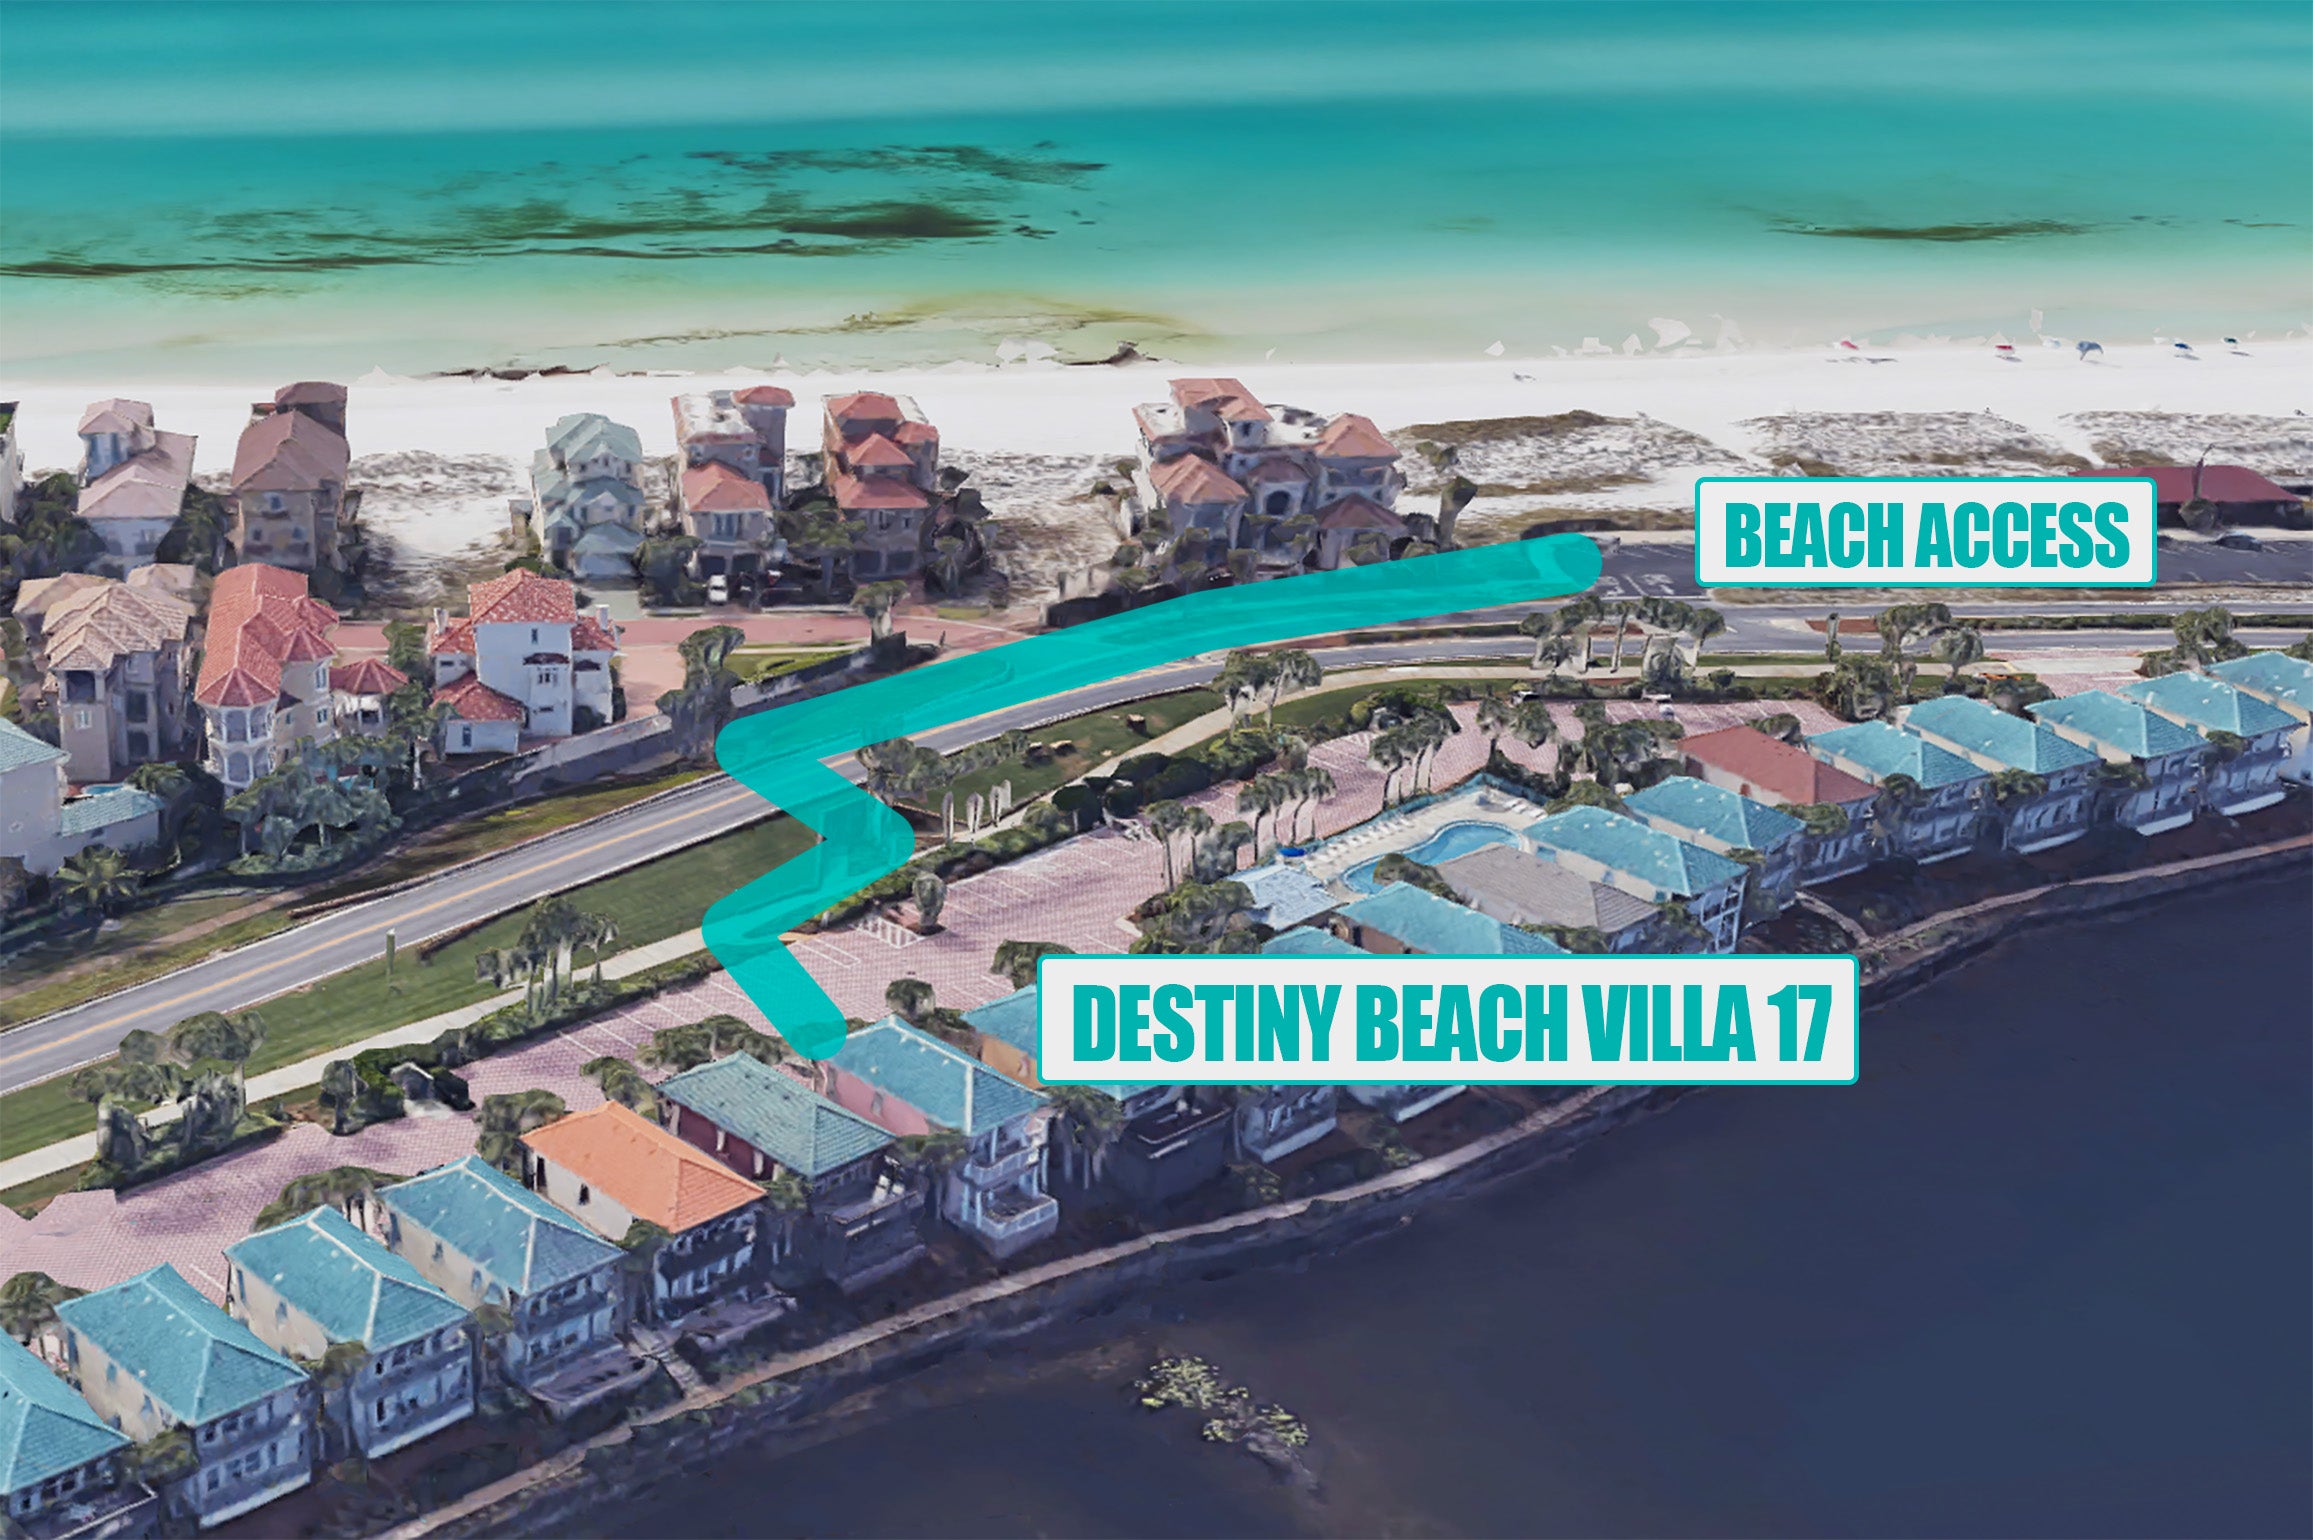 Destiny Beach Villa 17 Beach Access Map